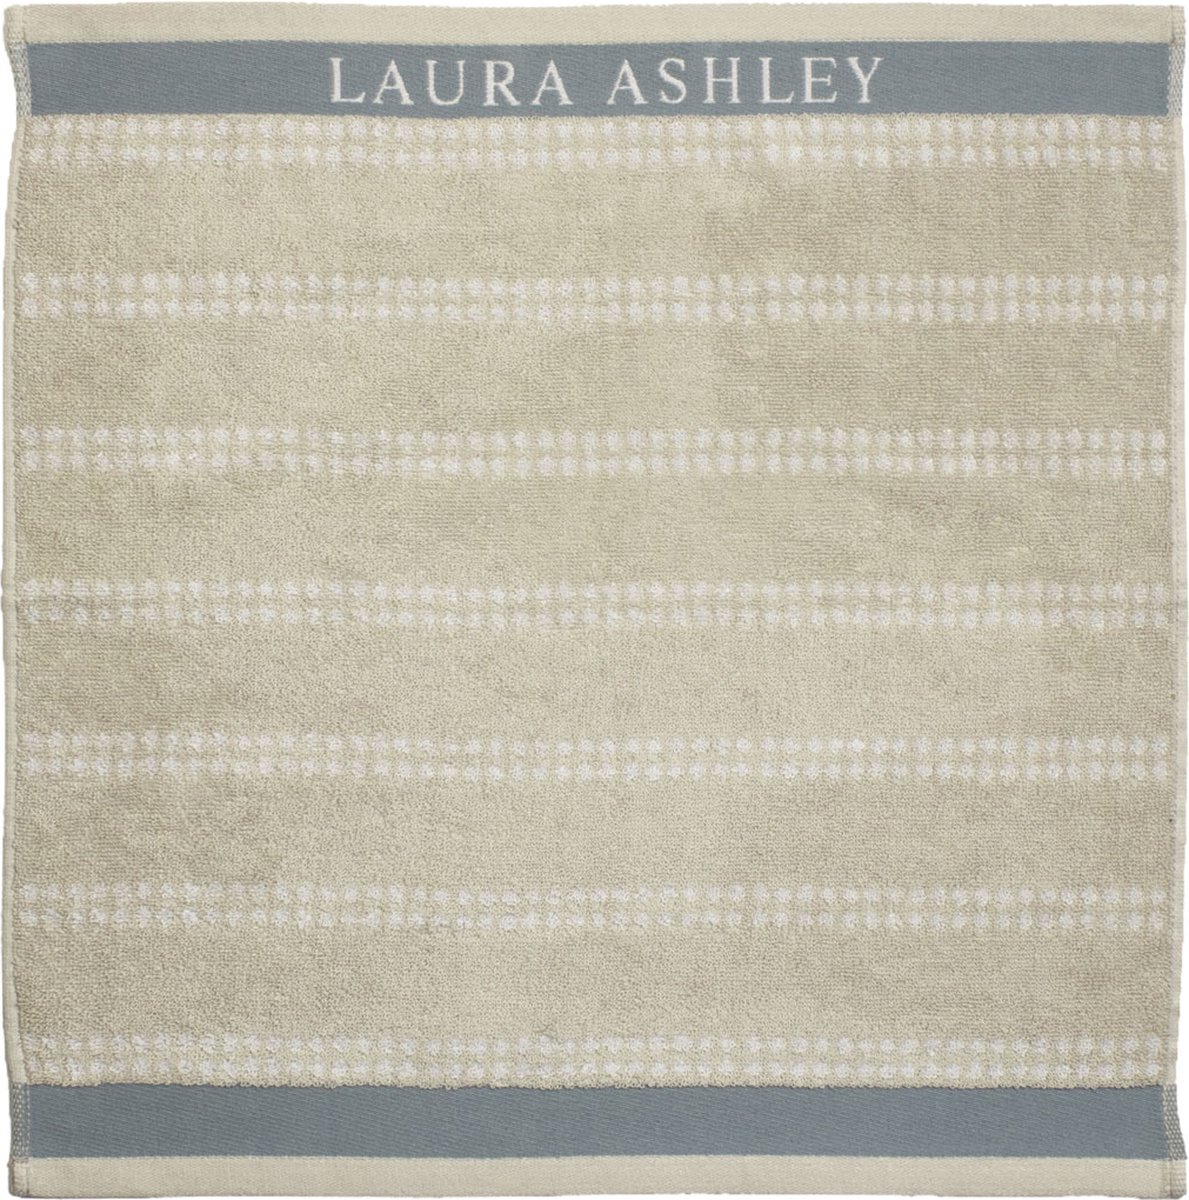 Keukendoek Cobblestone Stripe 50x50 cm - Laura Ashley Heritage servies (set van 6)